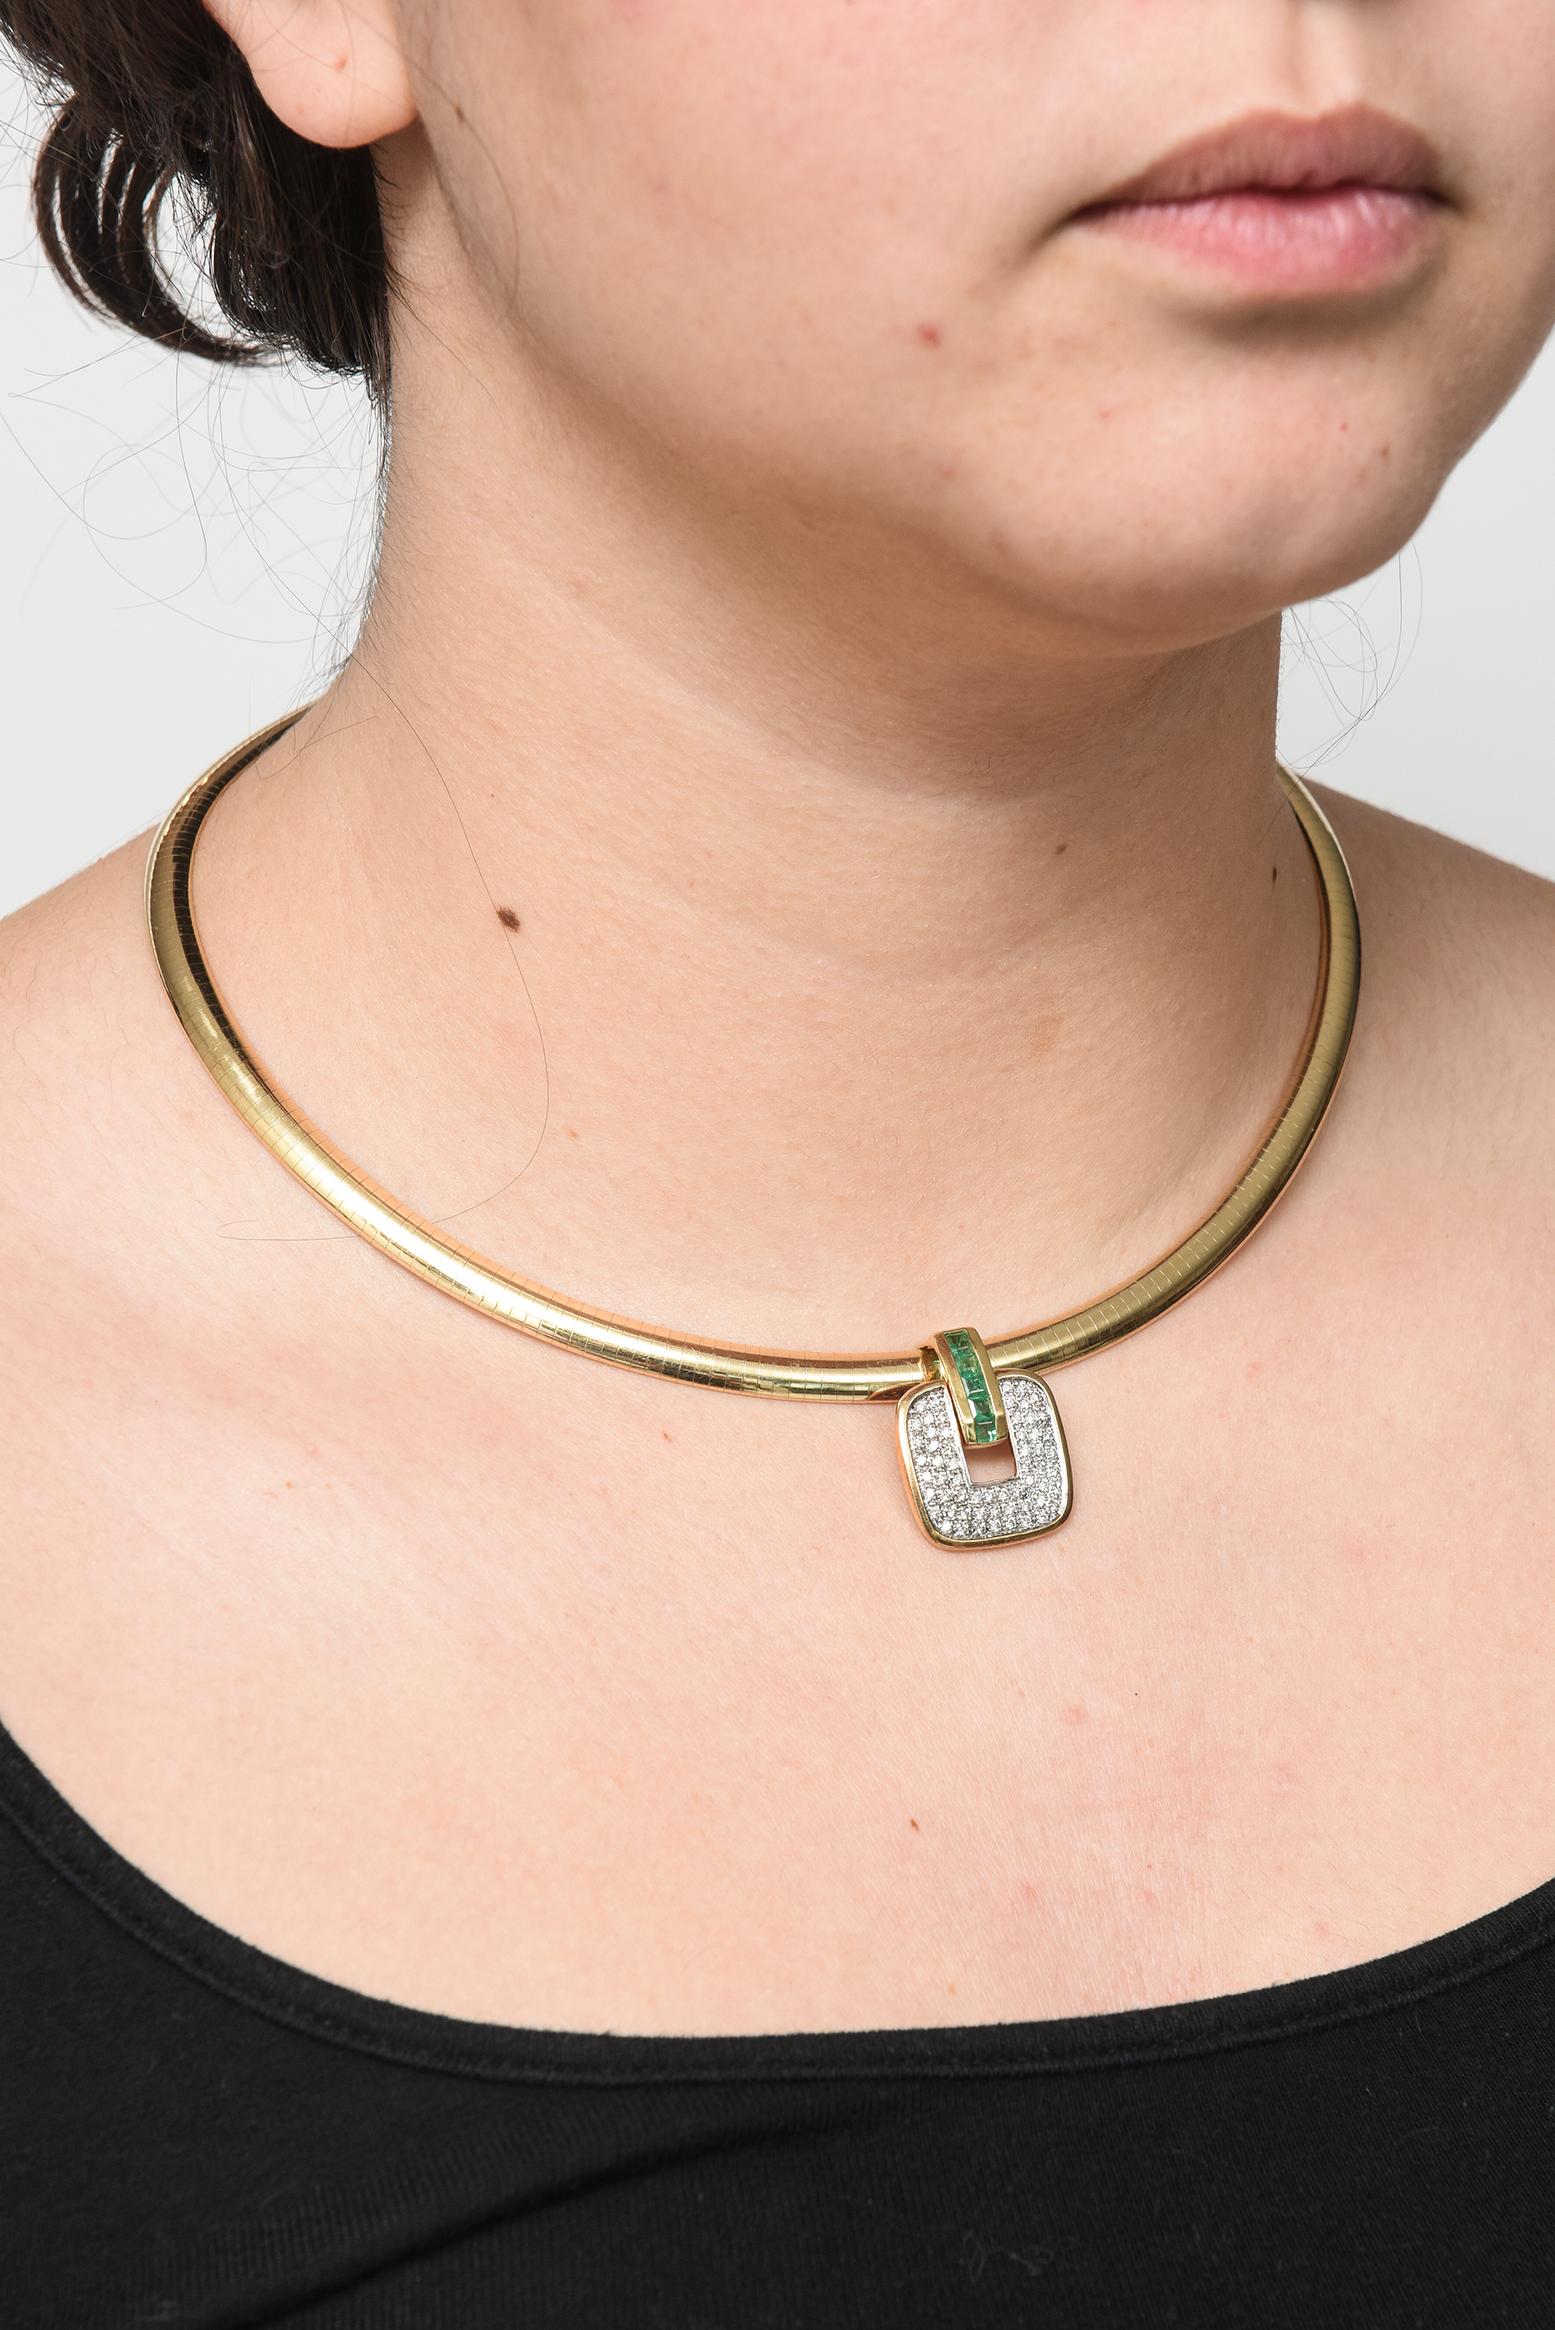 omega necklace pendant